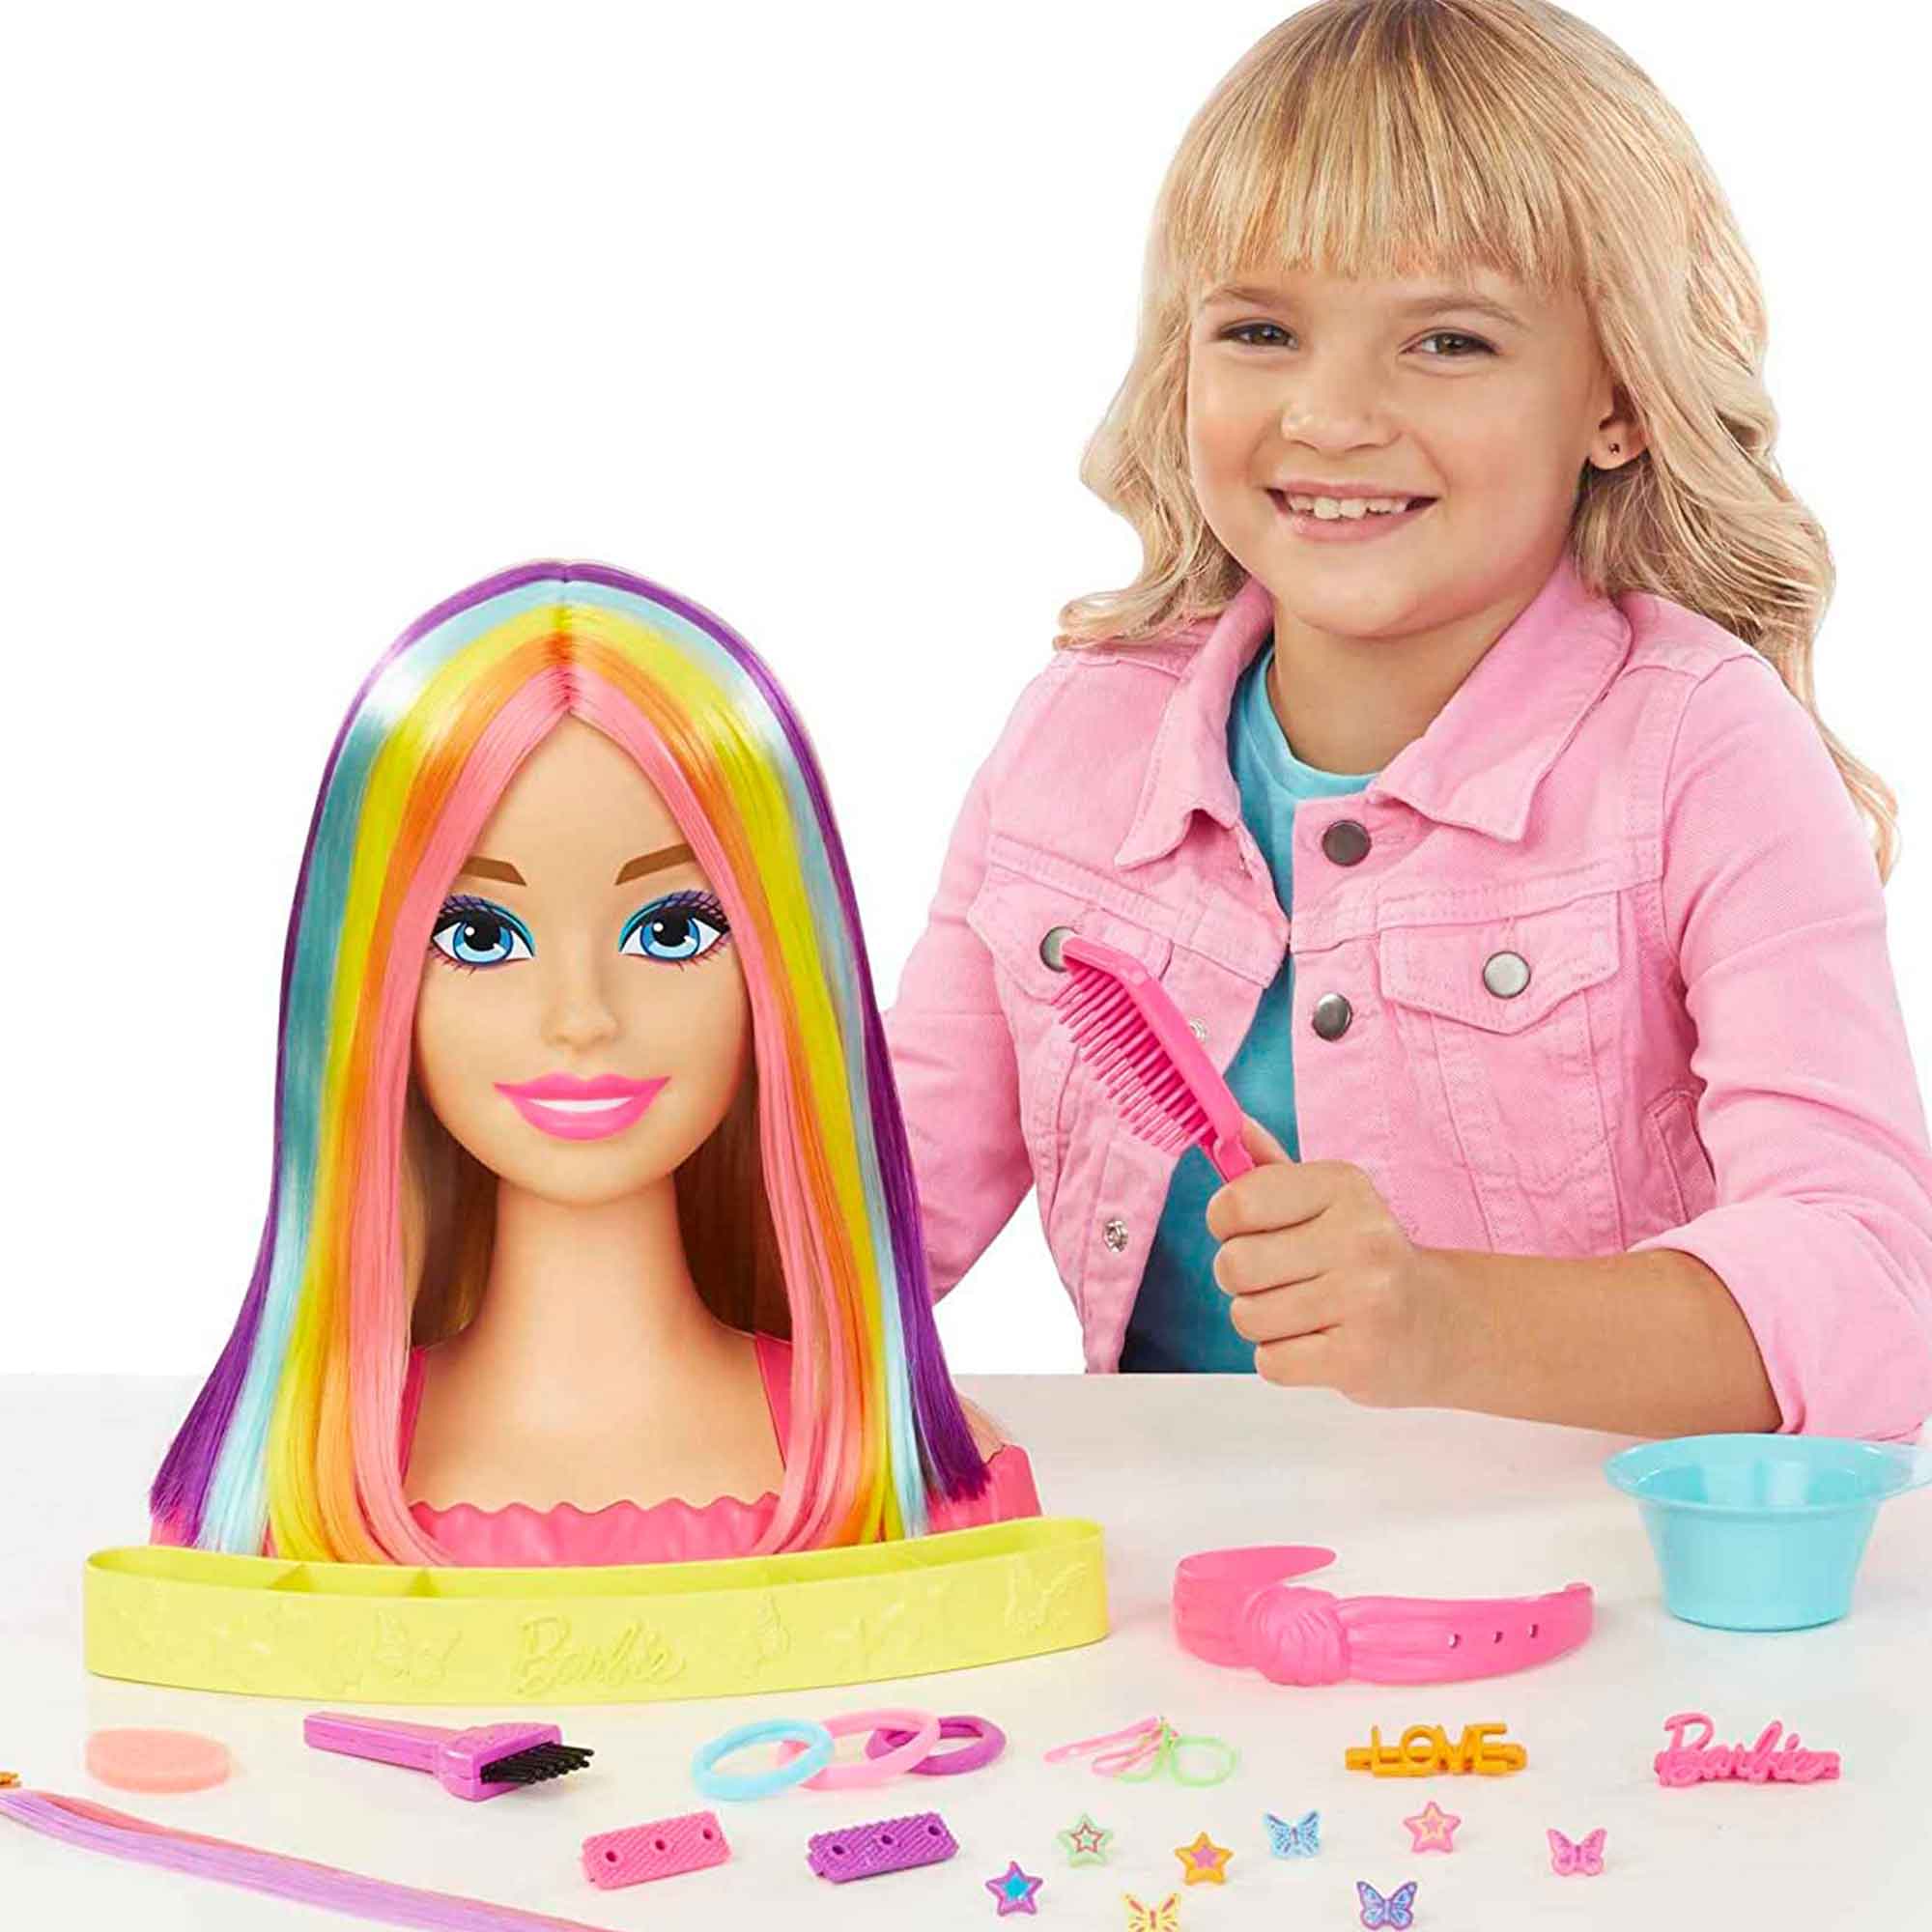 2011 Barbie Styling Head And Hand Nails | Kids Fashion Stylist Toy | eBay